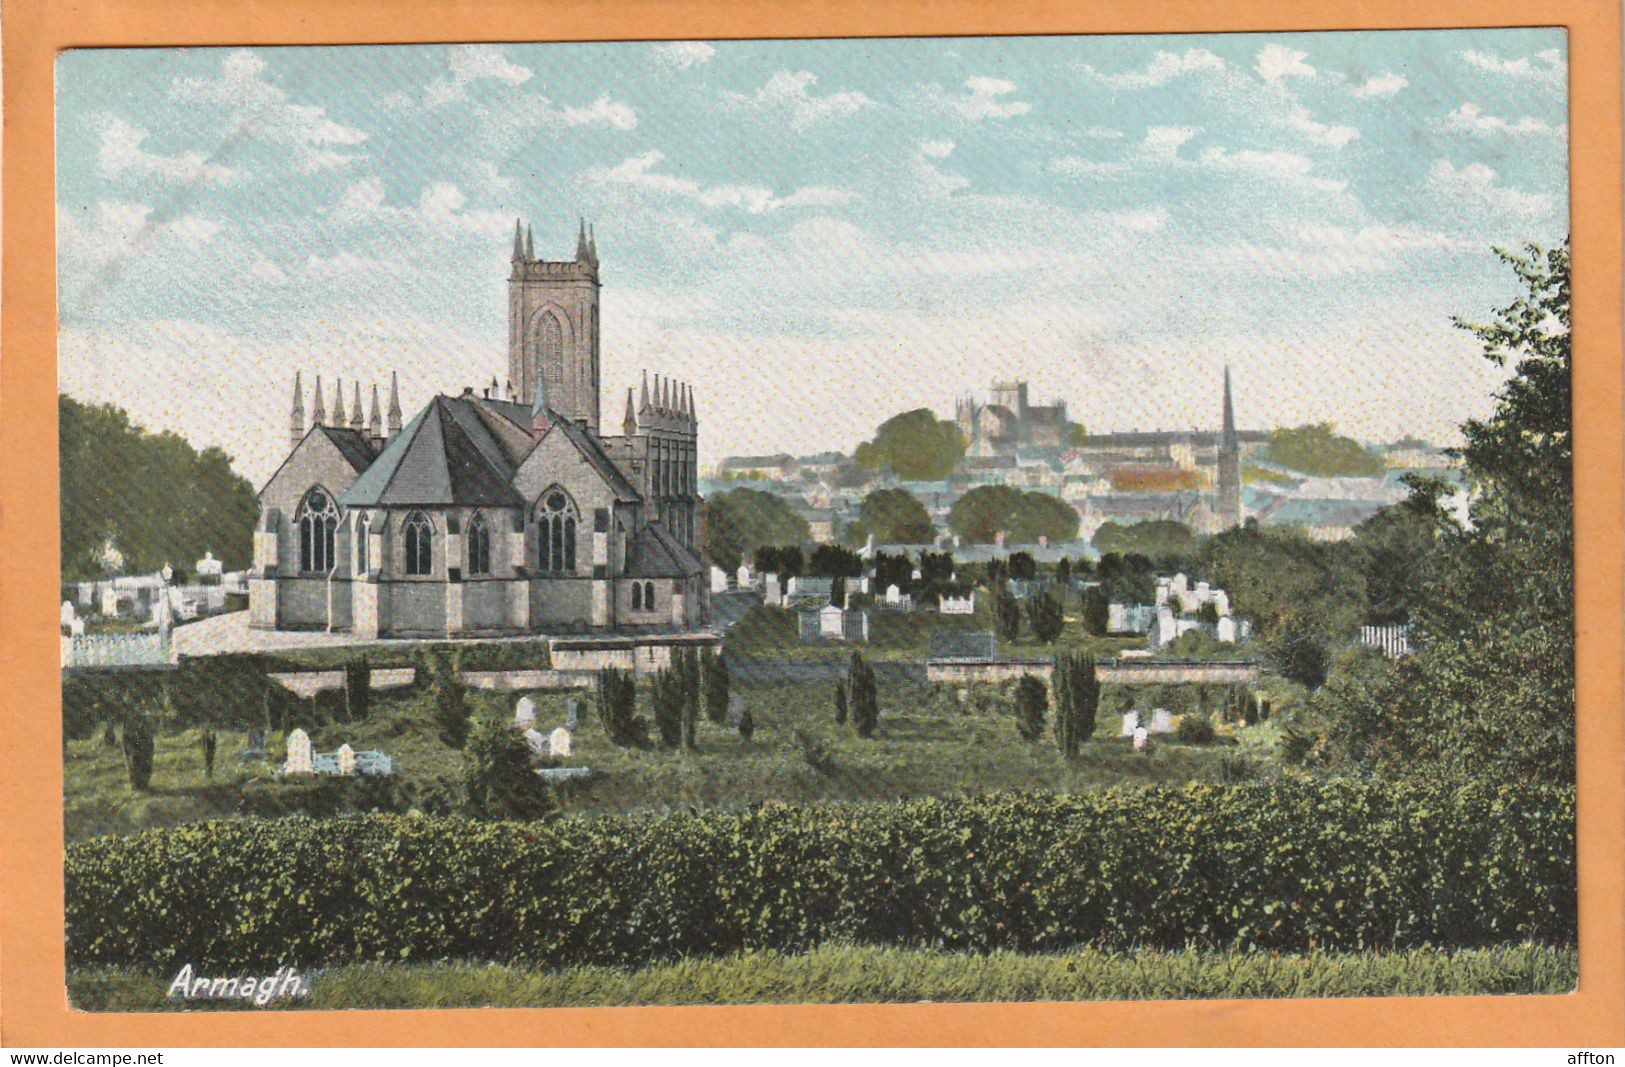 Armagh N Ireland 1908 Postcard - Armagh